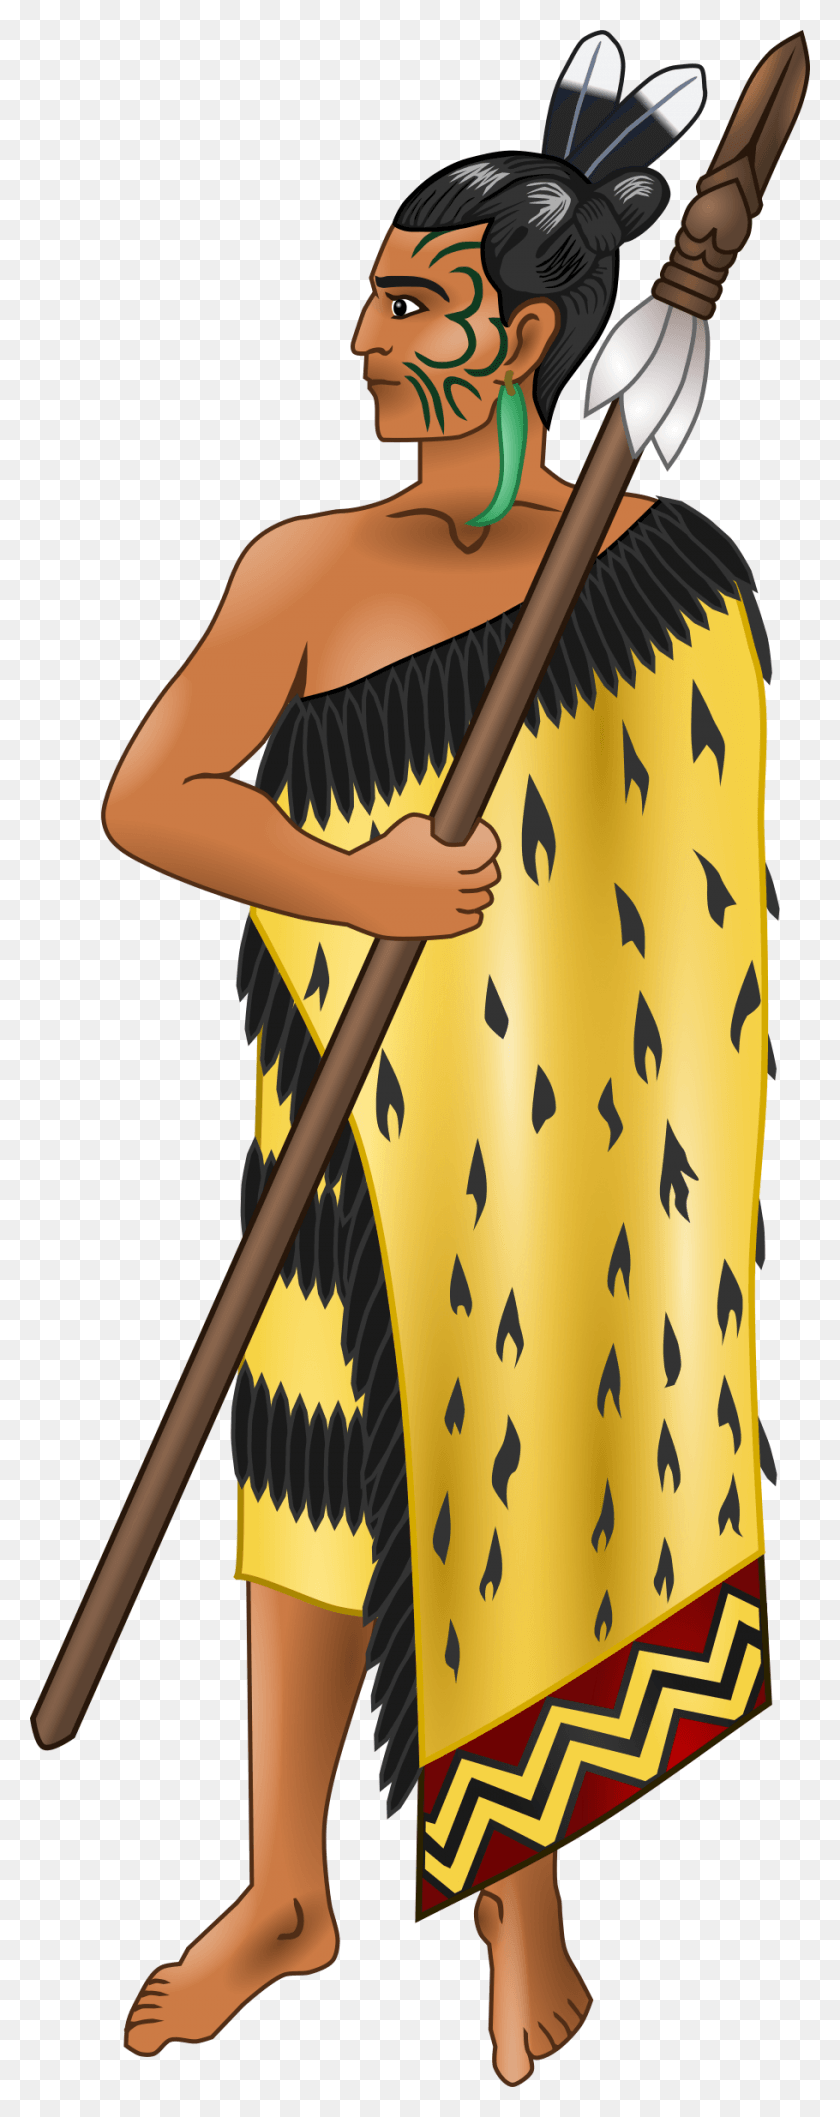 910x2400 This Free Icons Design Of Maori Warrior, Persona, Humano, Disfraz Hd Png